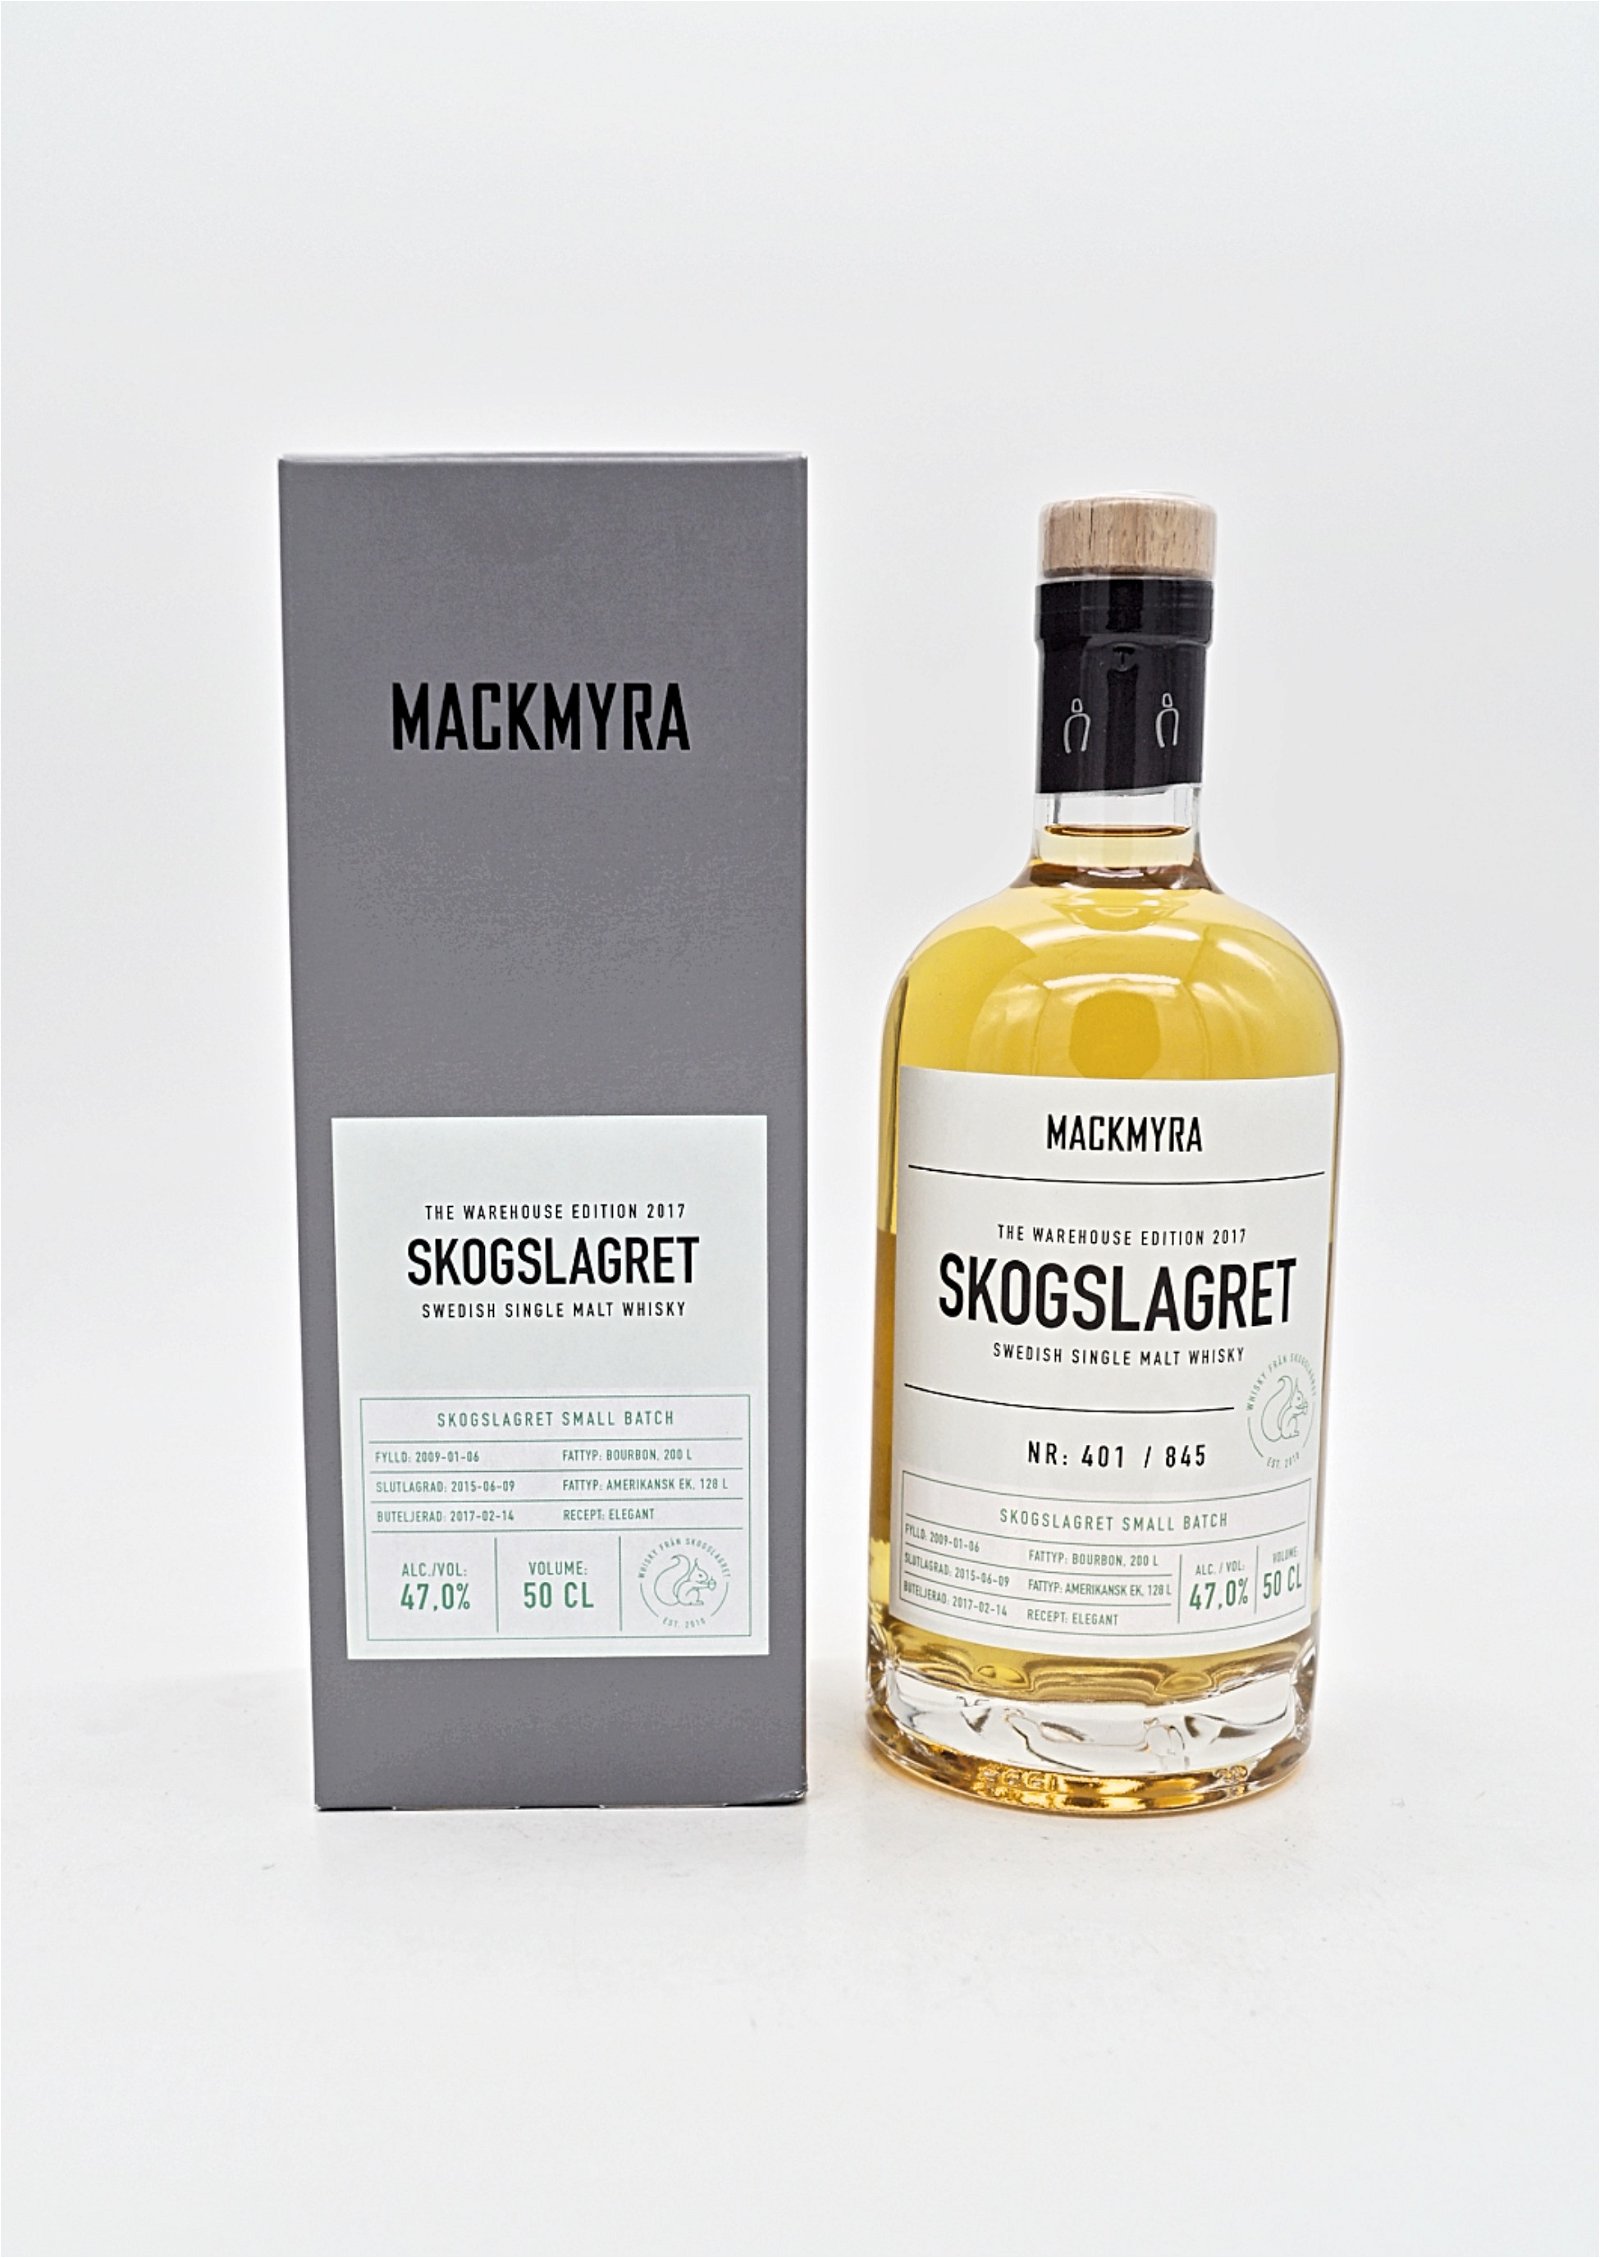 Mackmyra Skogslarget Warehouse Edition 2017 SwedishSingle Malt Whisky